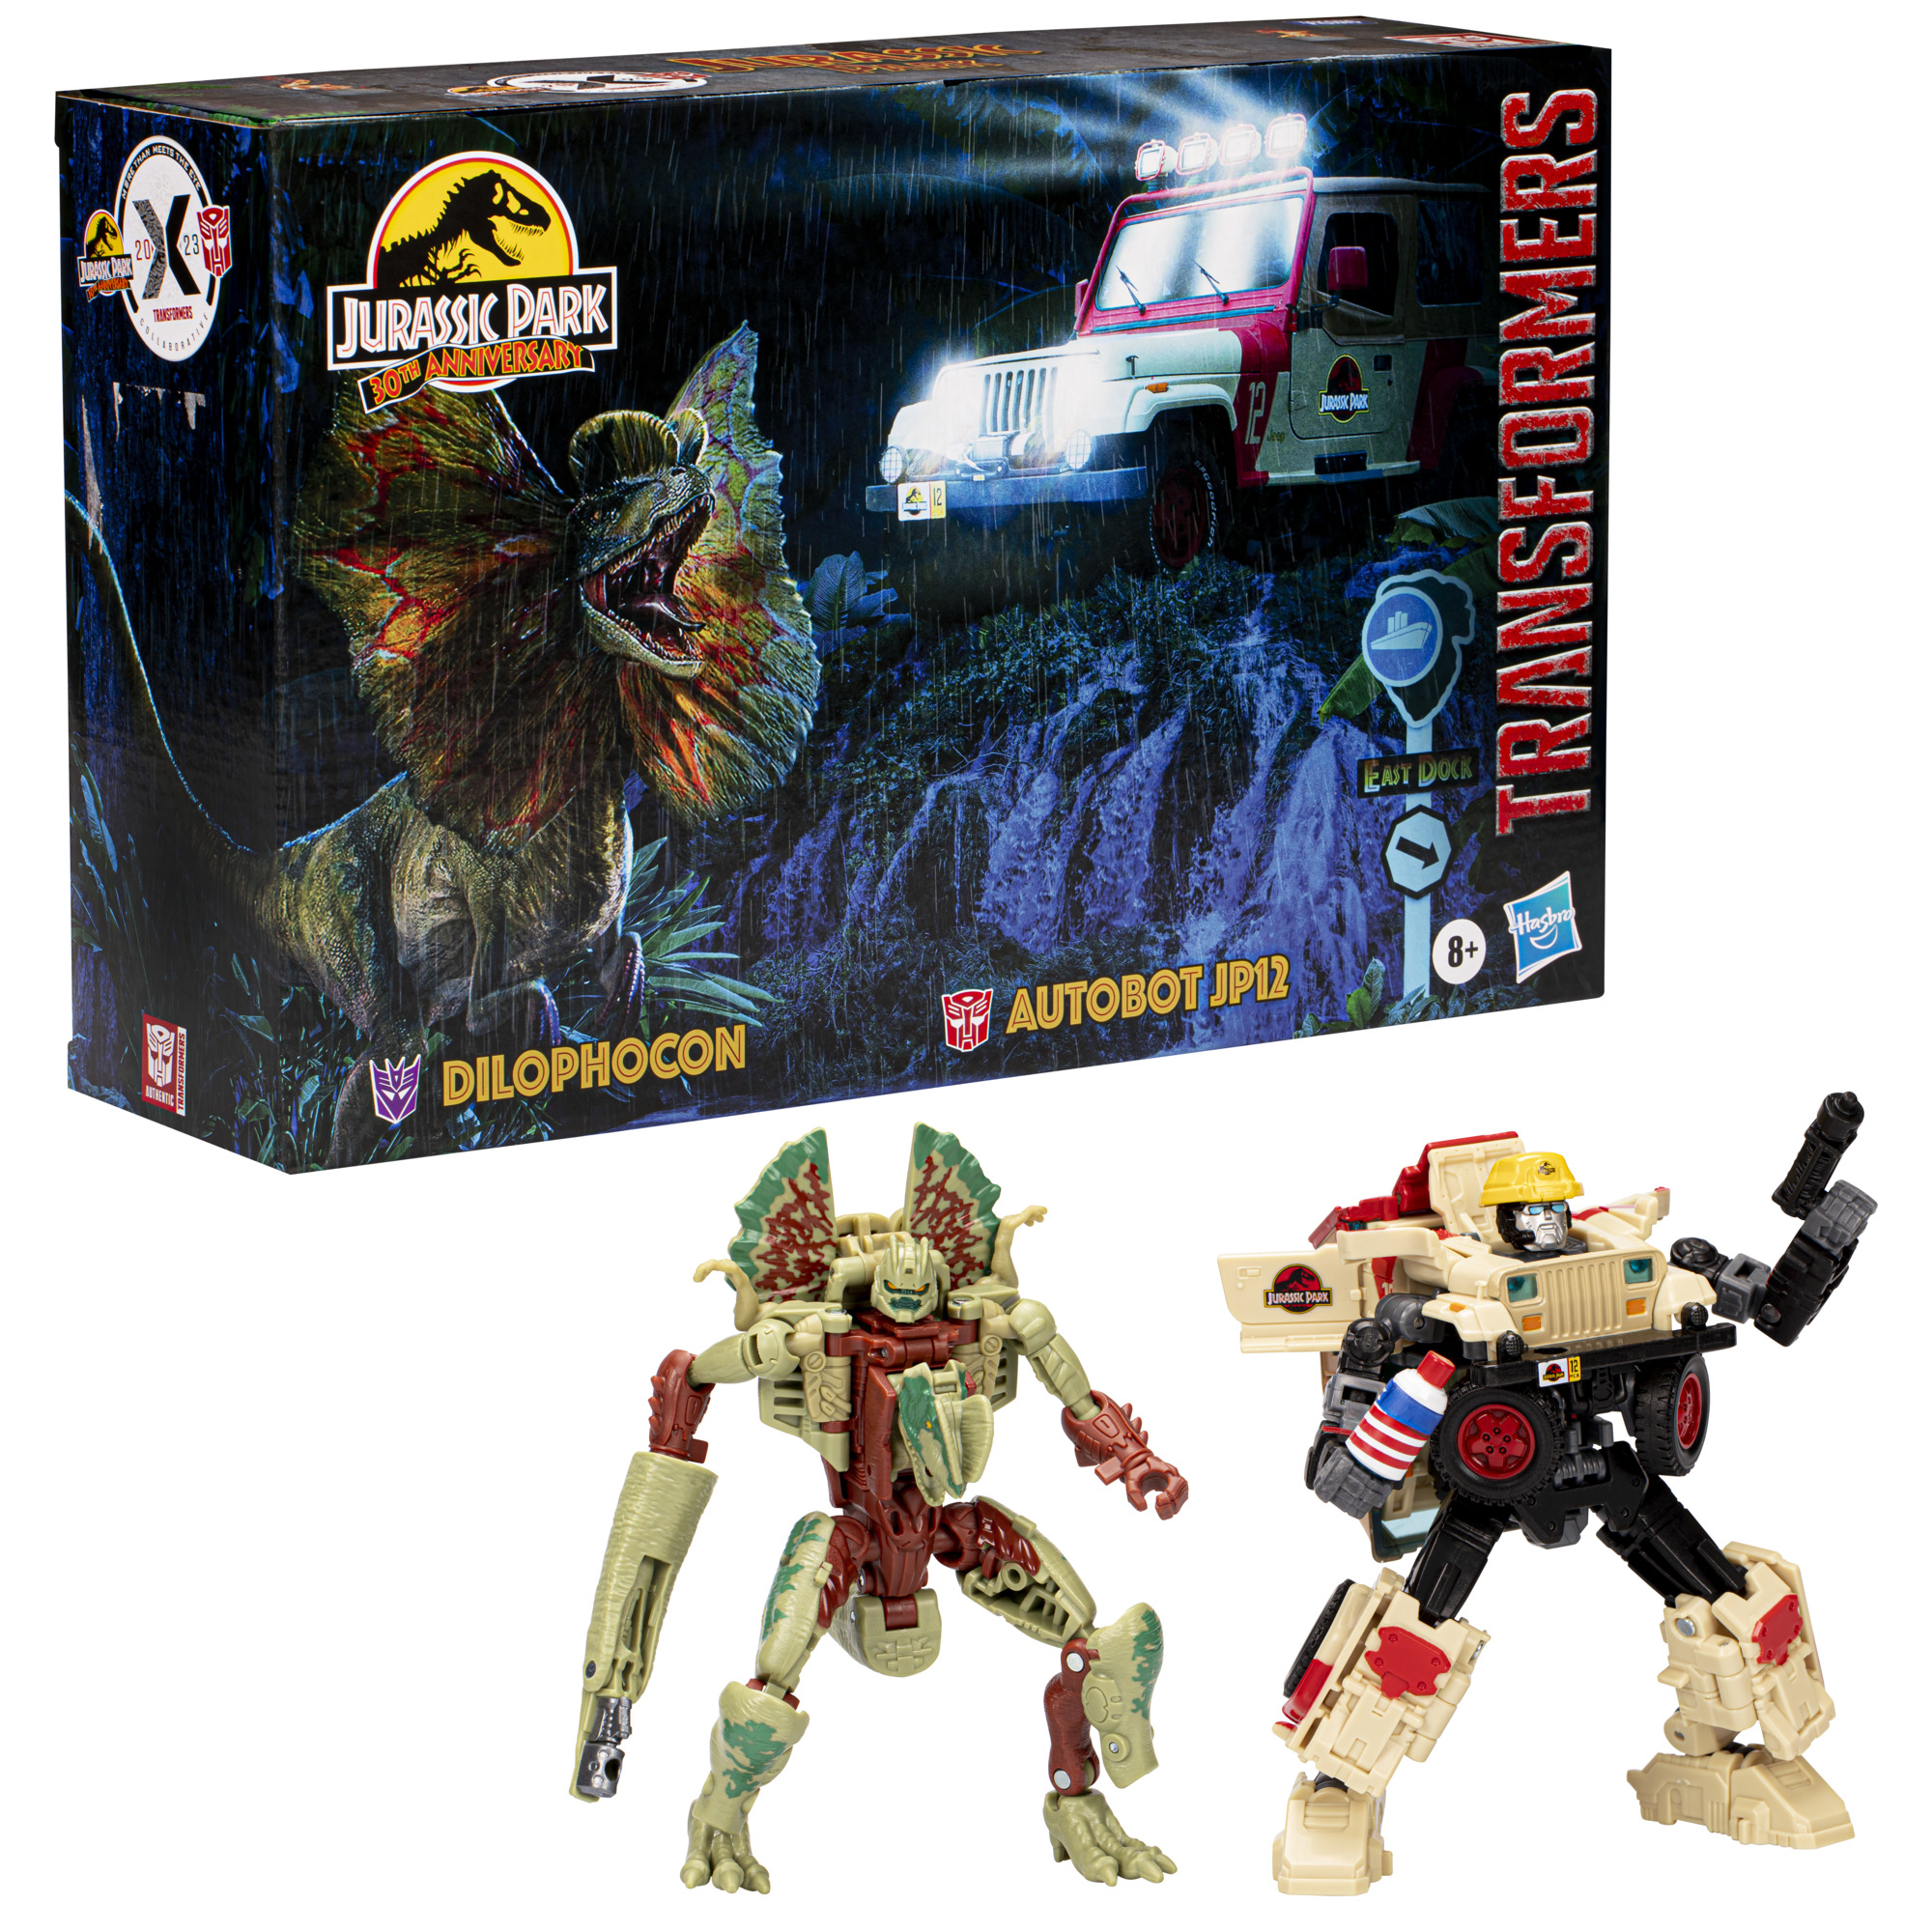 Hasbro Reveals Jurassic Park x Transformers Dilophocon and Autobot JP12